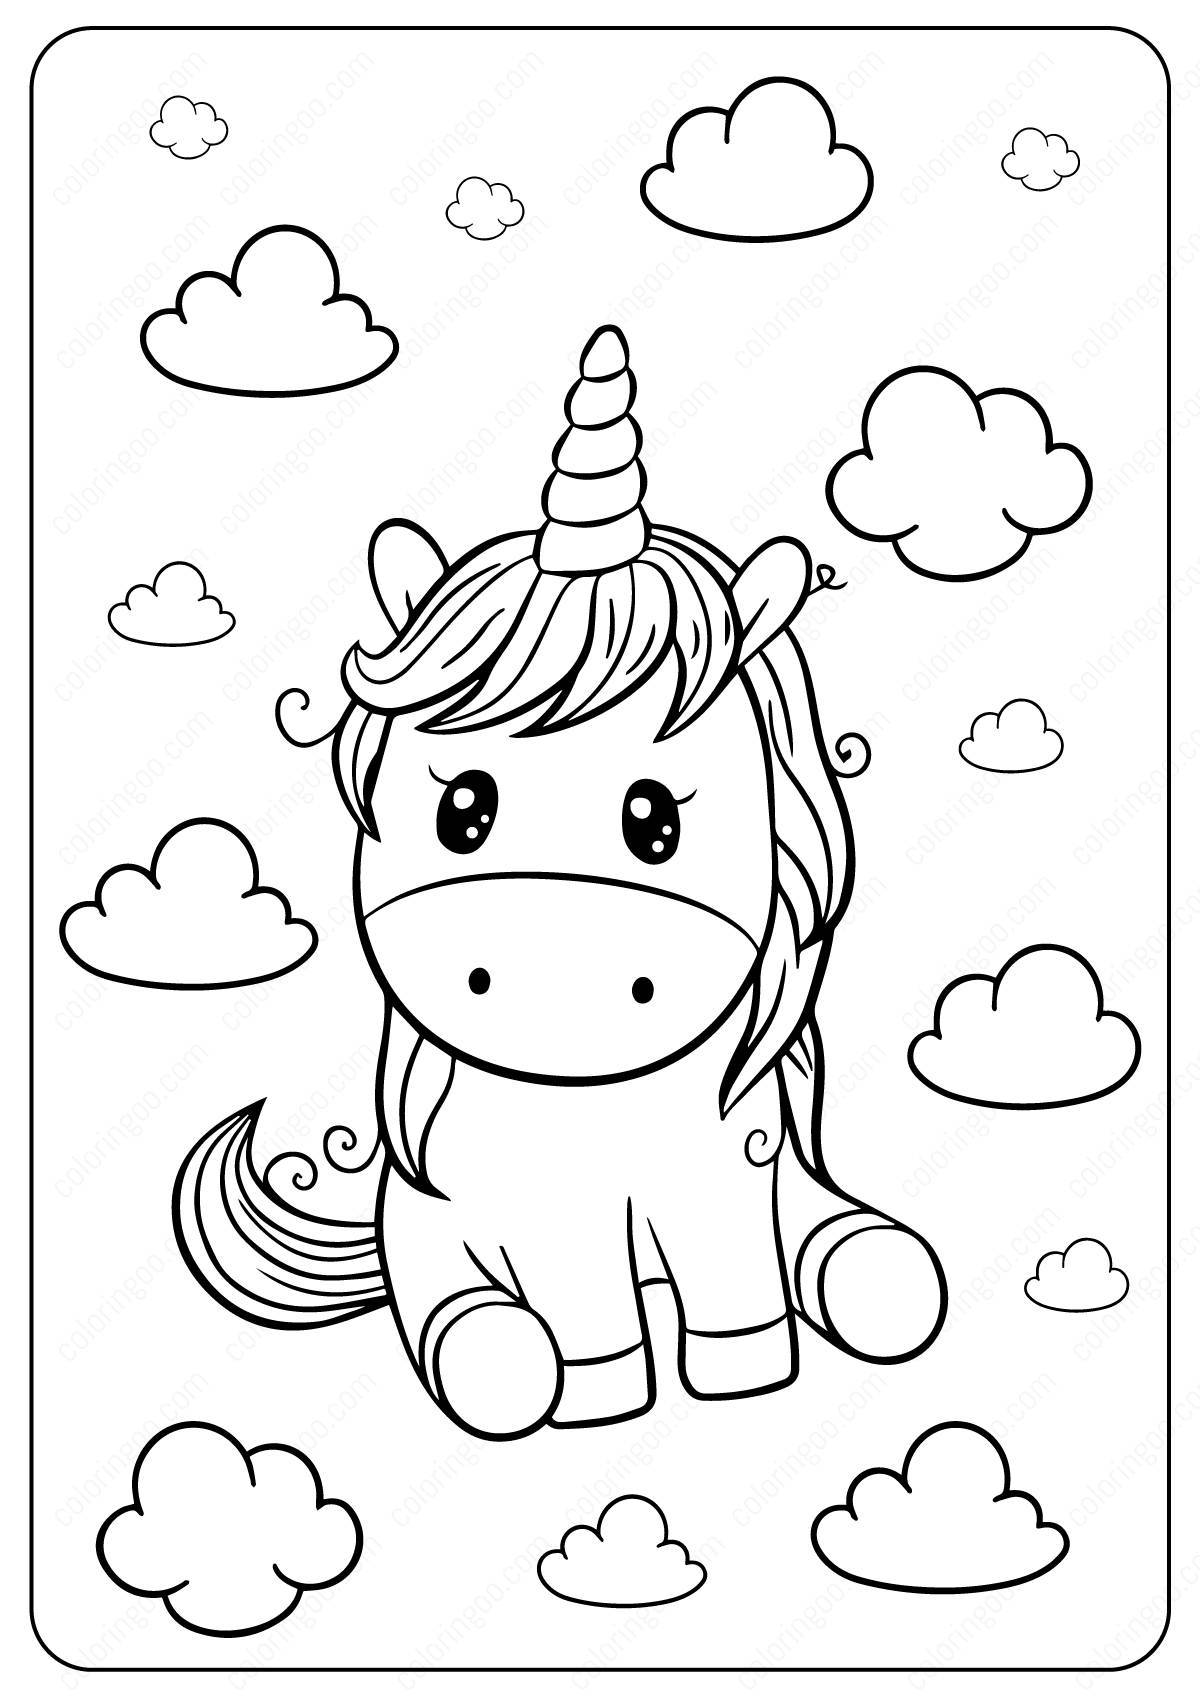 Joyful coloring unicorn for children 6-7 years old